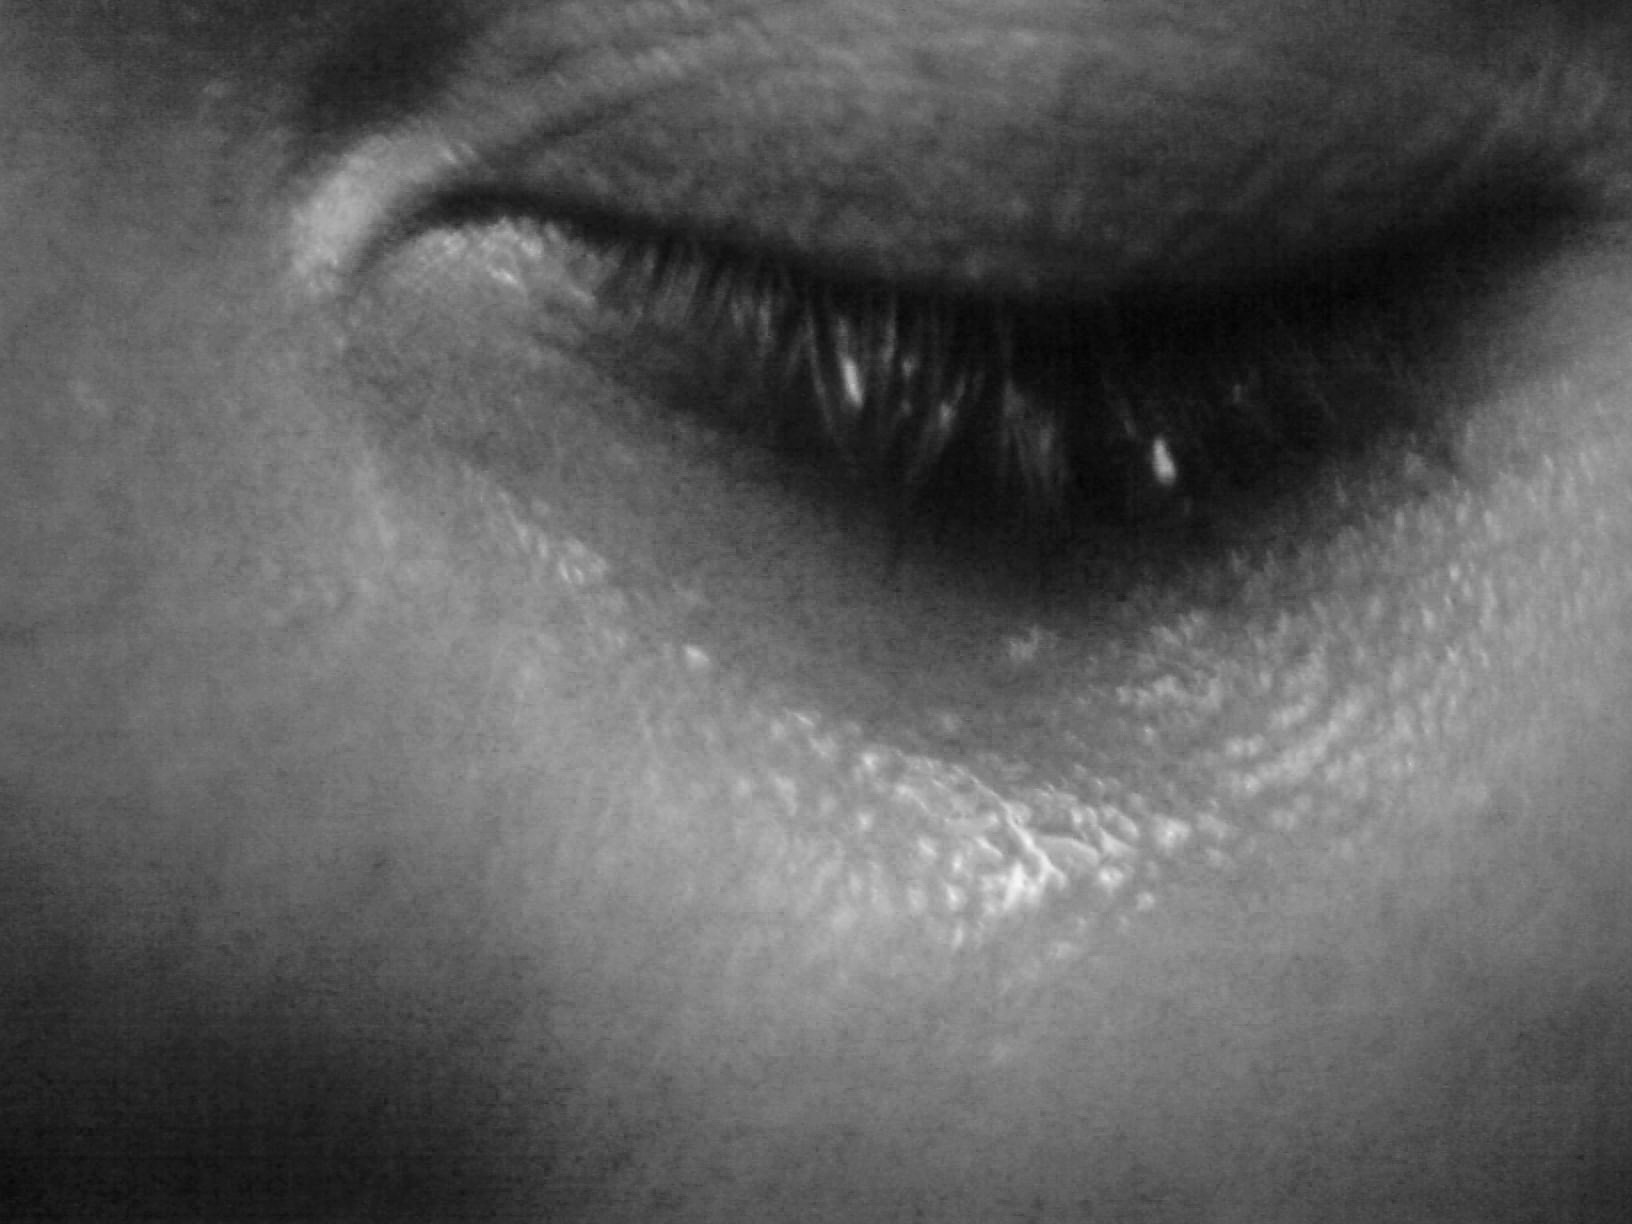 a closed eye with tears on a cheek